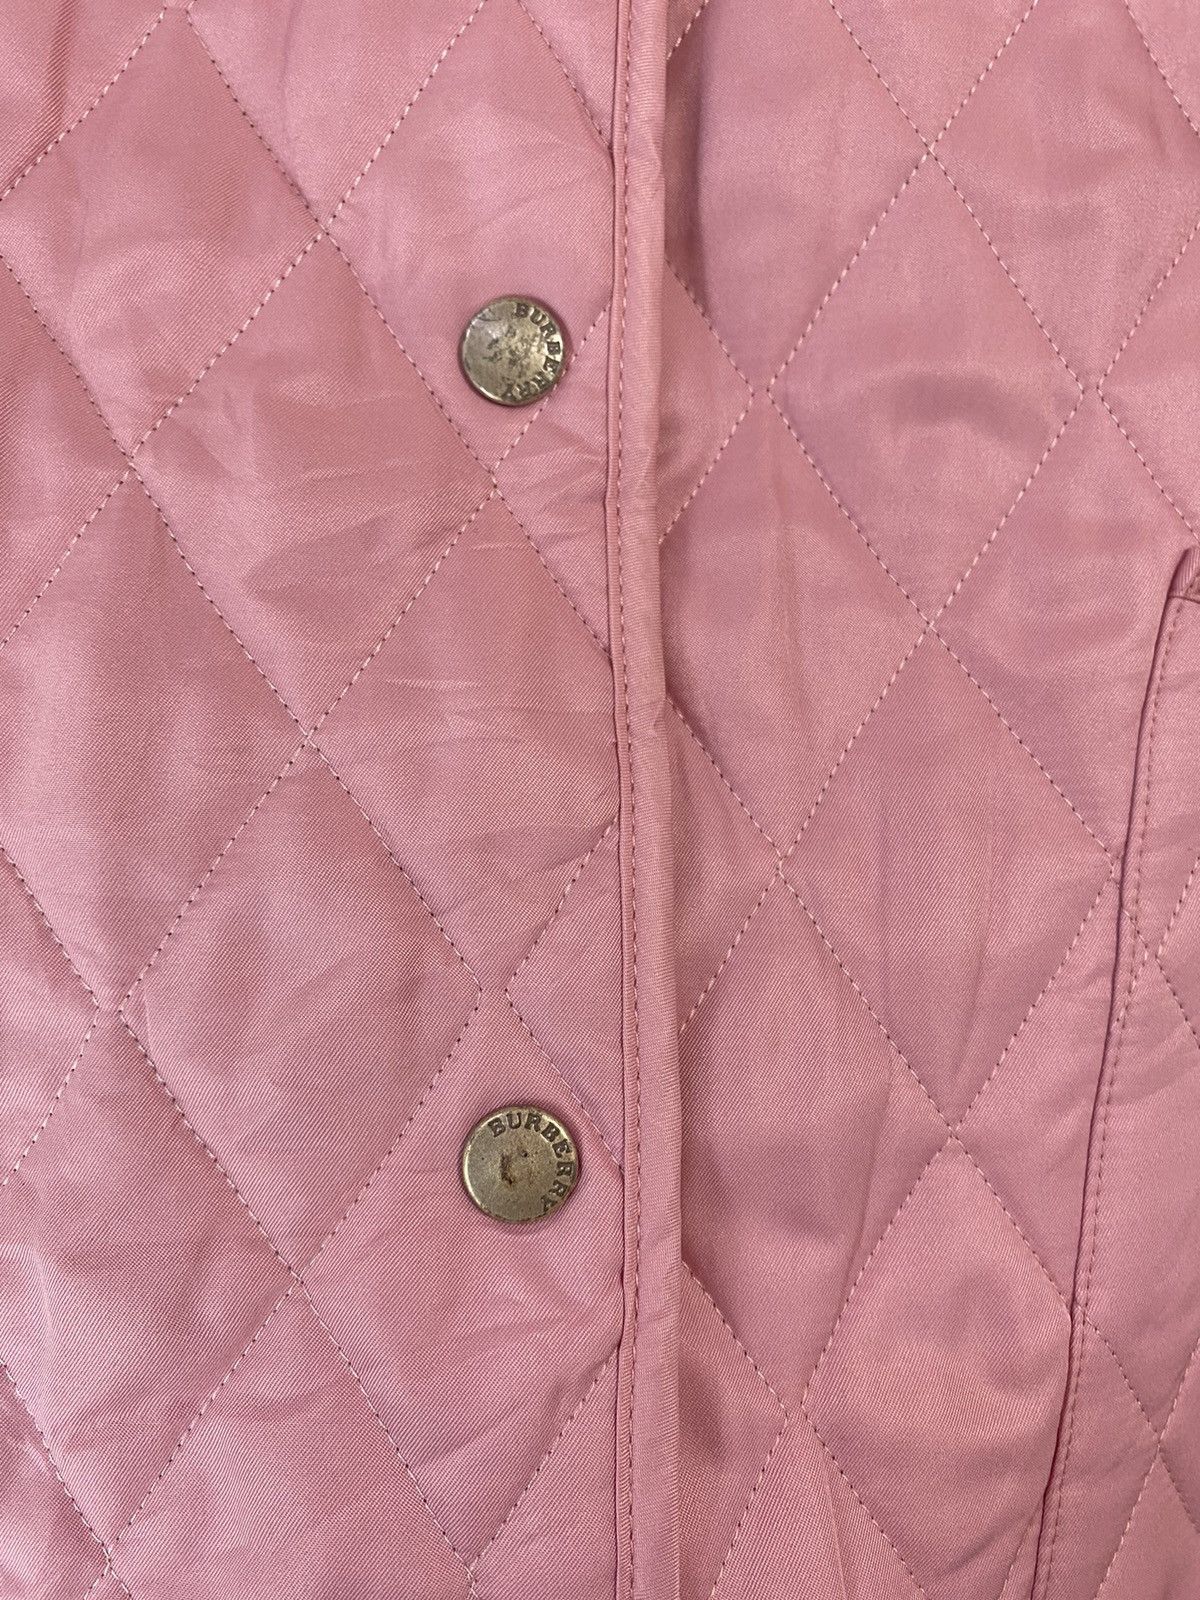 Burberry Quilted Jacket Design Pink Color Nova Check - 7